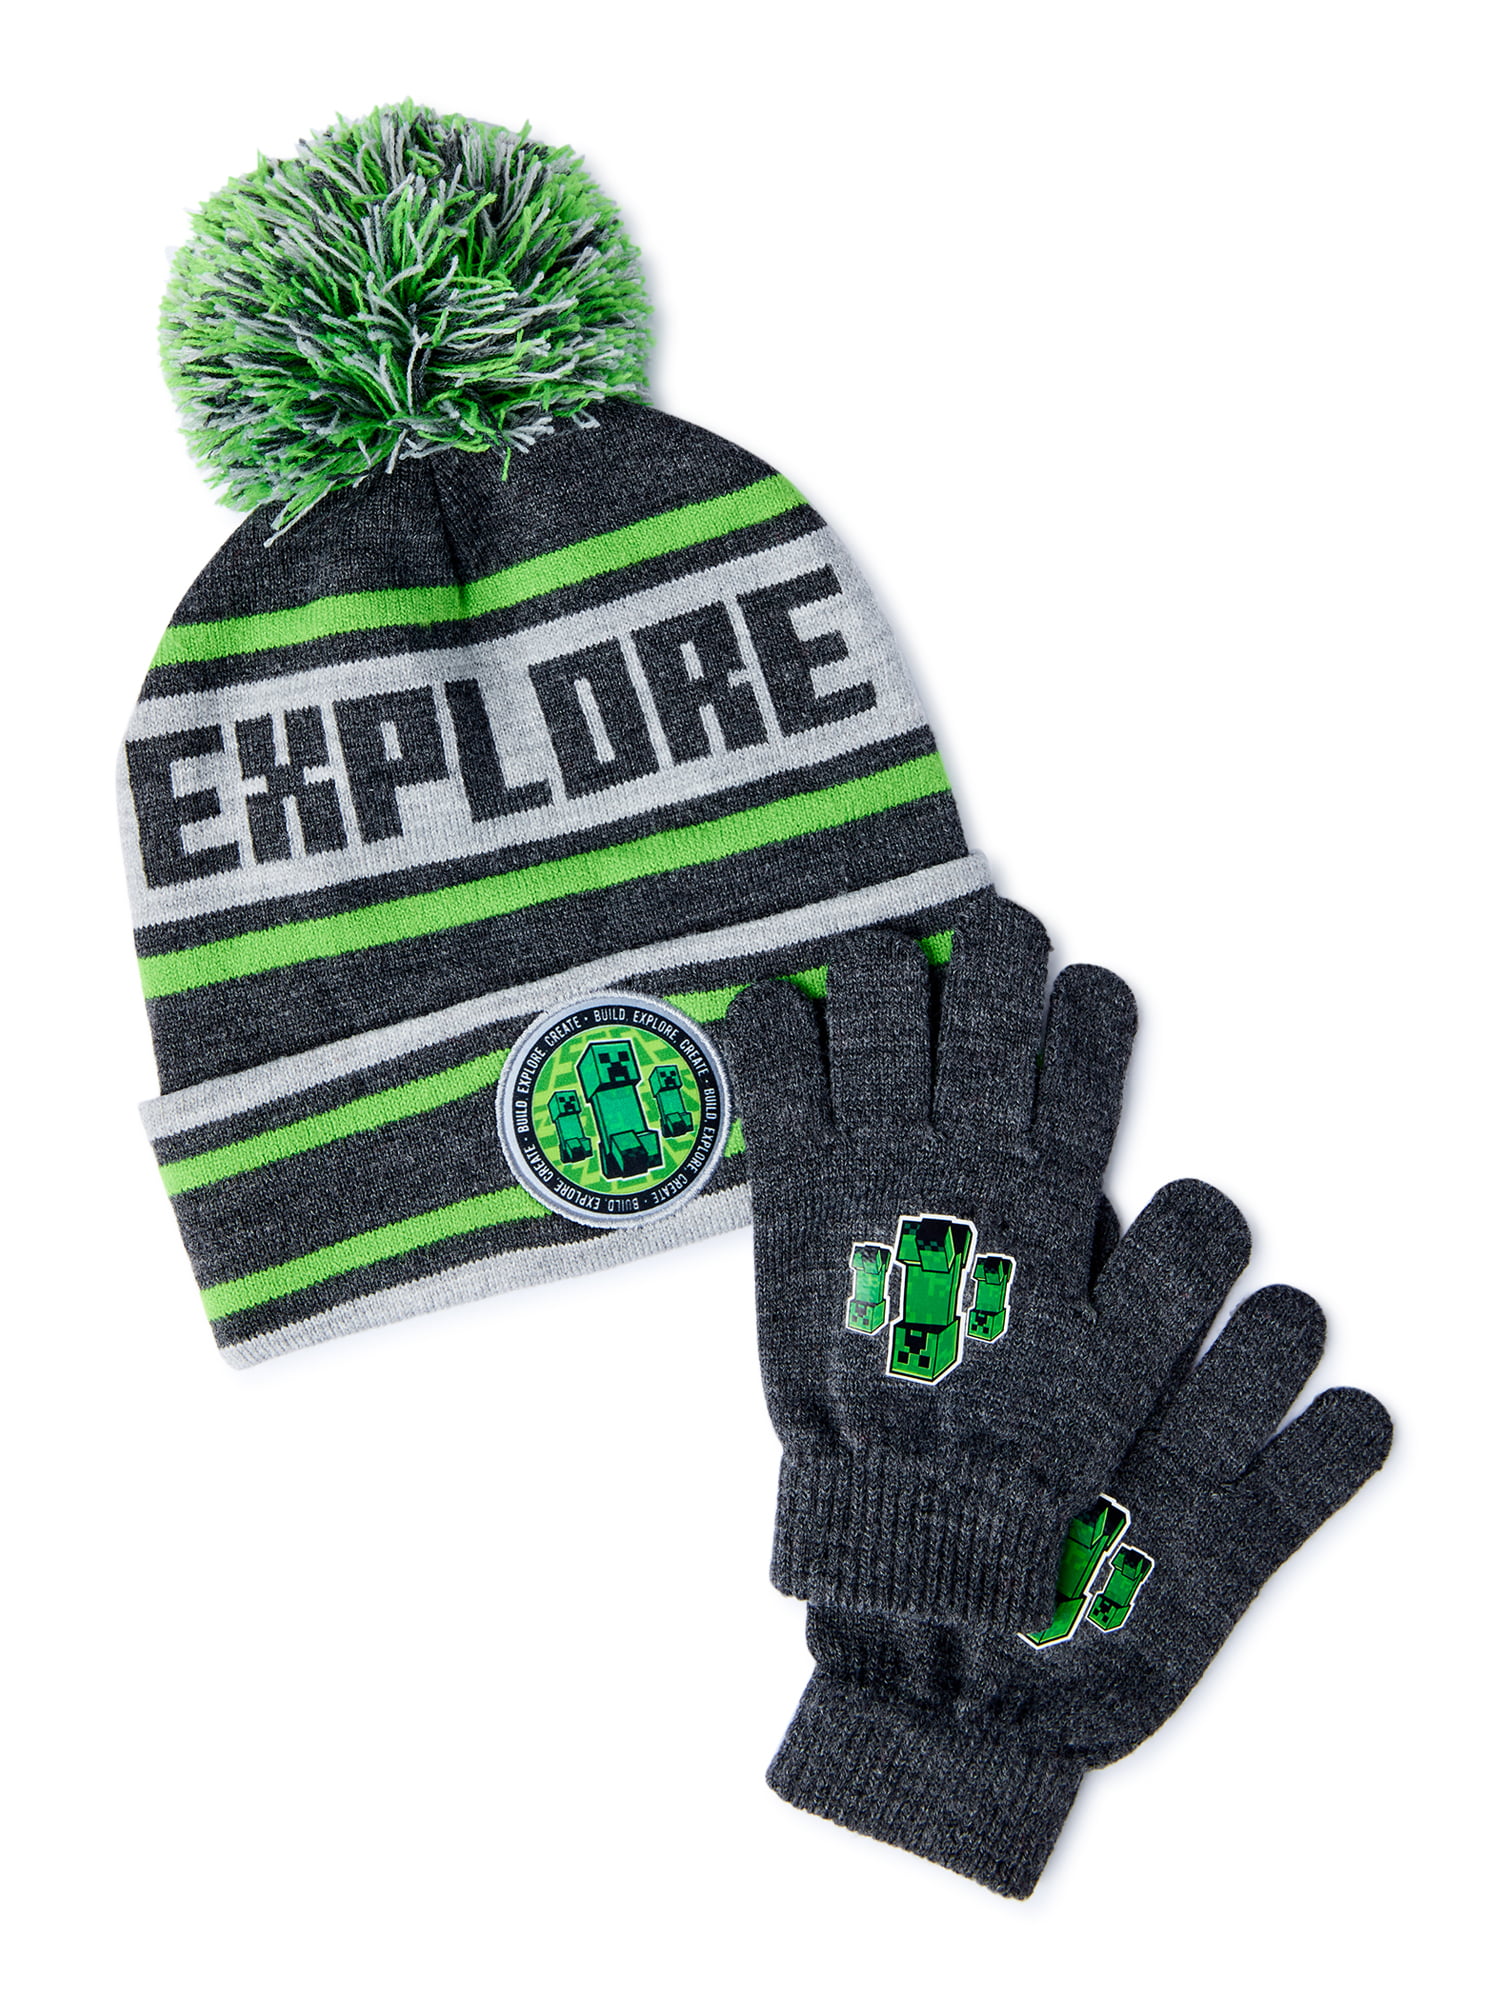 Minecraft Boys Knit Cap and Glove Set, One Size Fits Most - Walmart.com